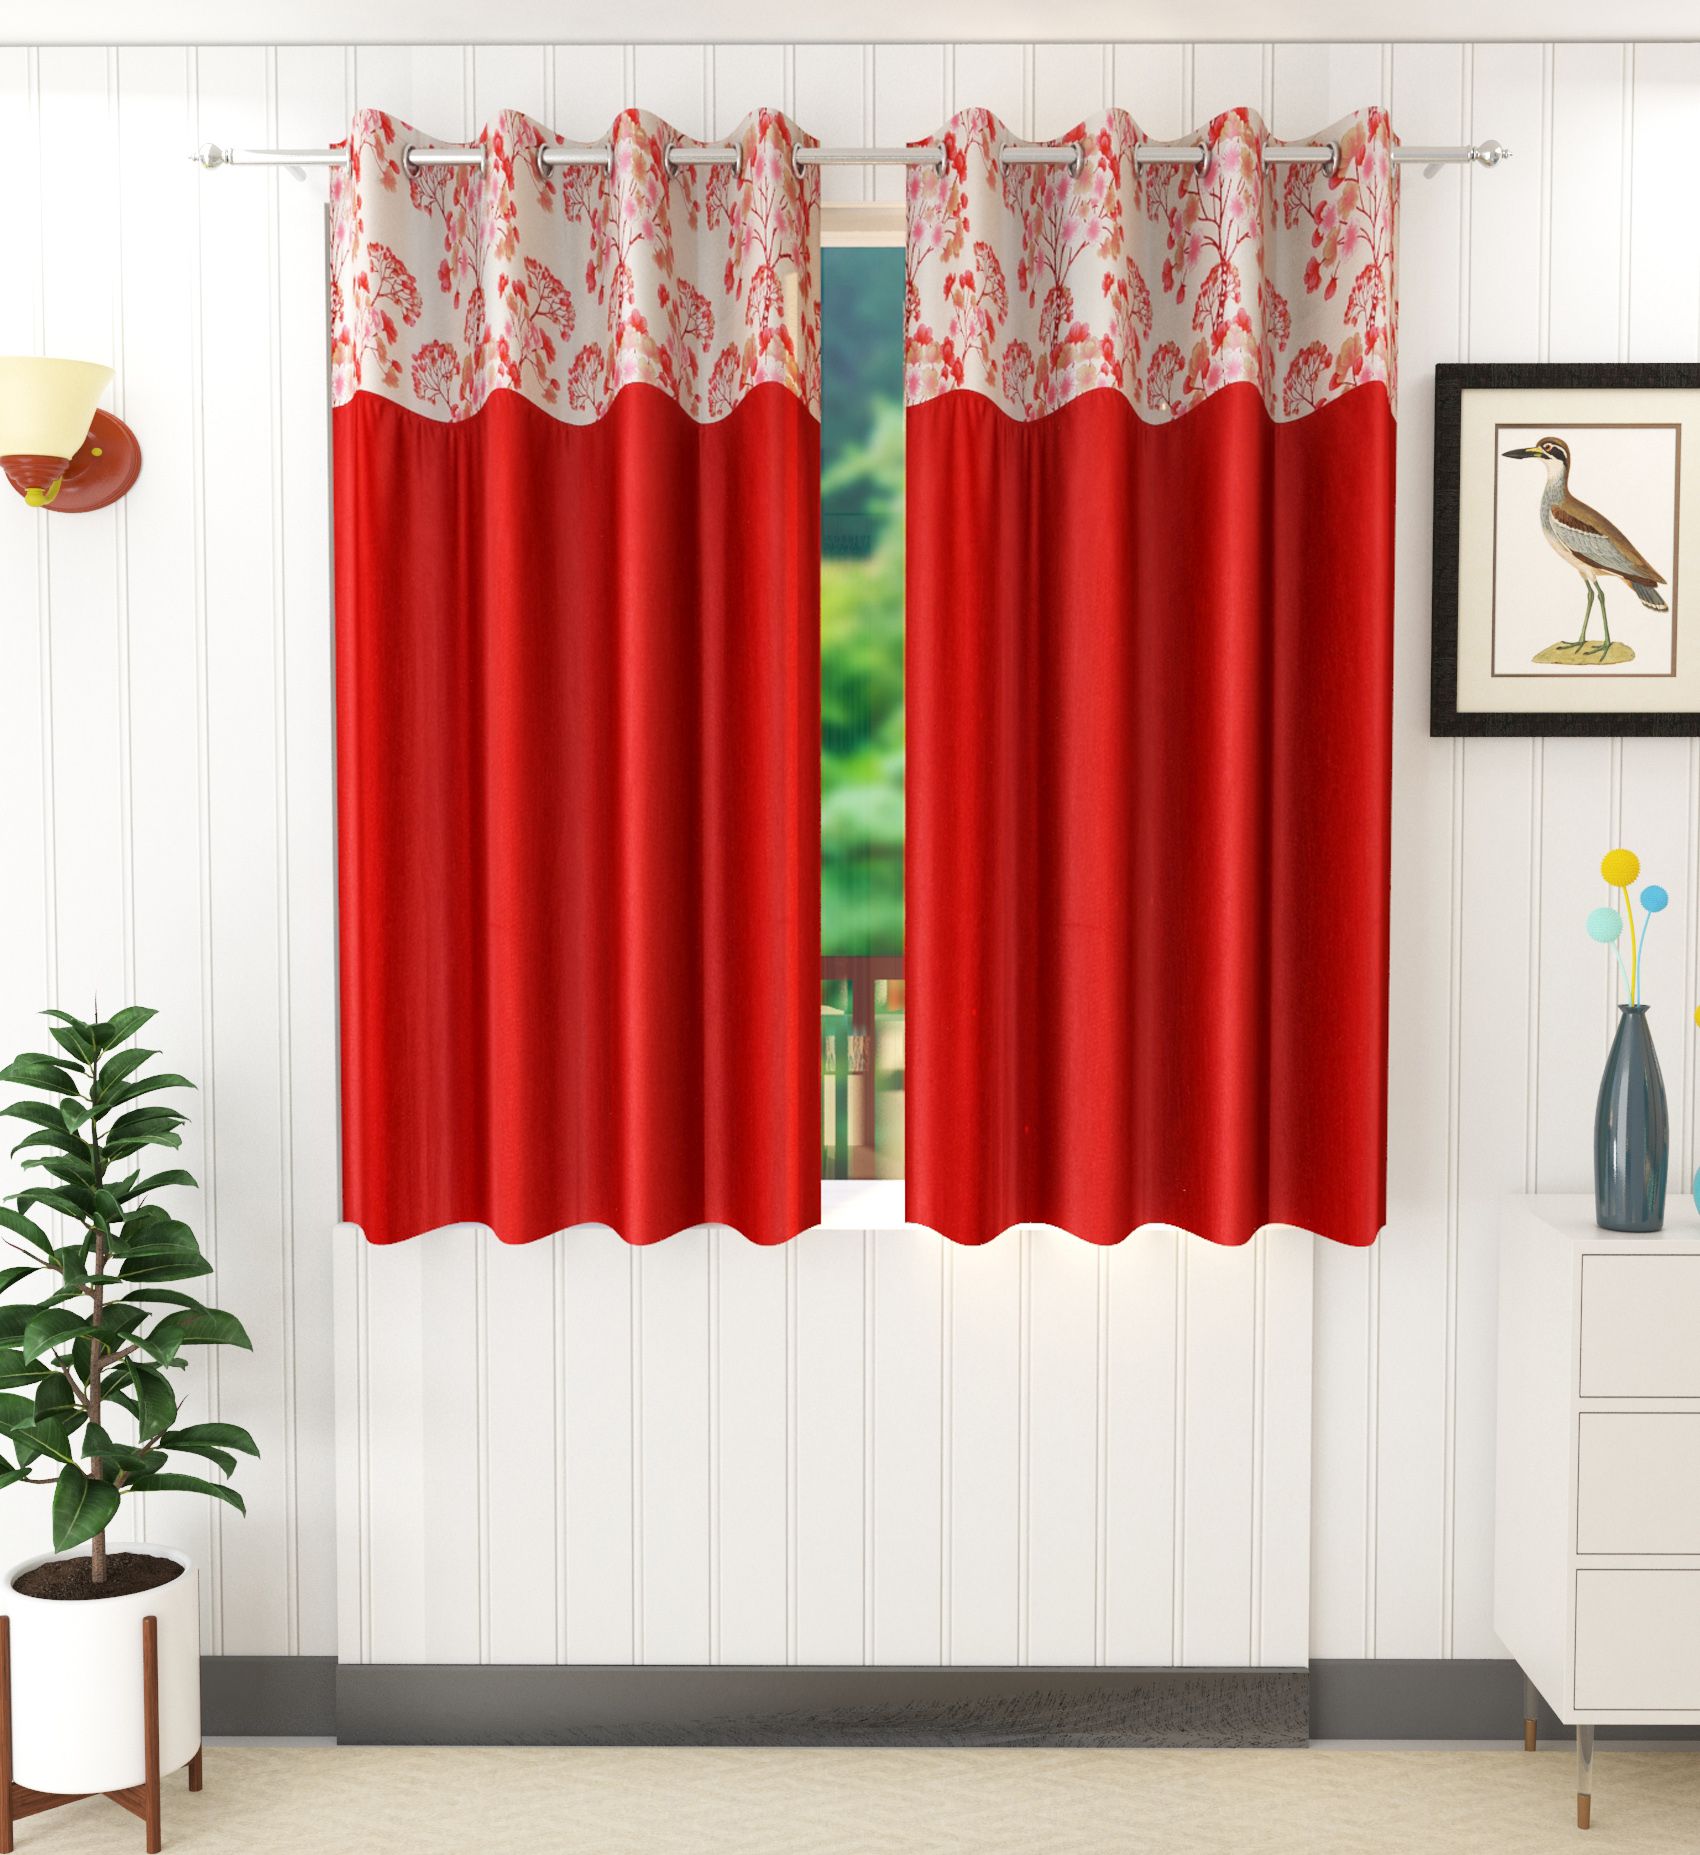     			Homefab India Floral Room Darkening Eyelet Curtain 5 ft ( Pack of 2 ) - Maroon